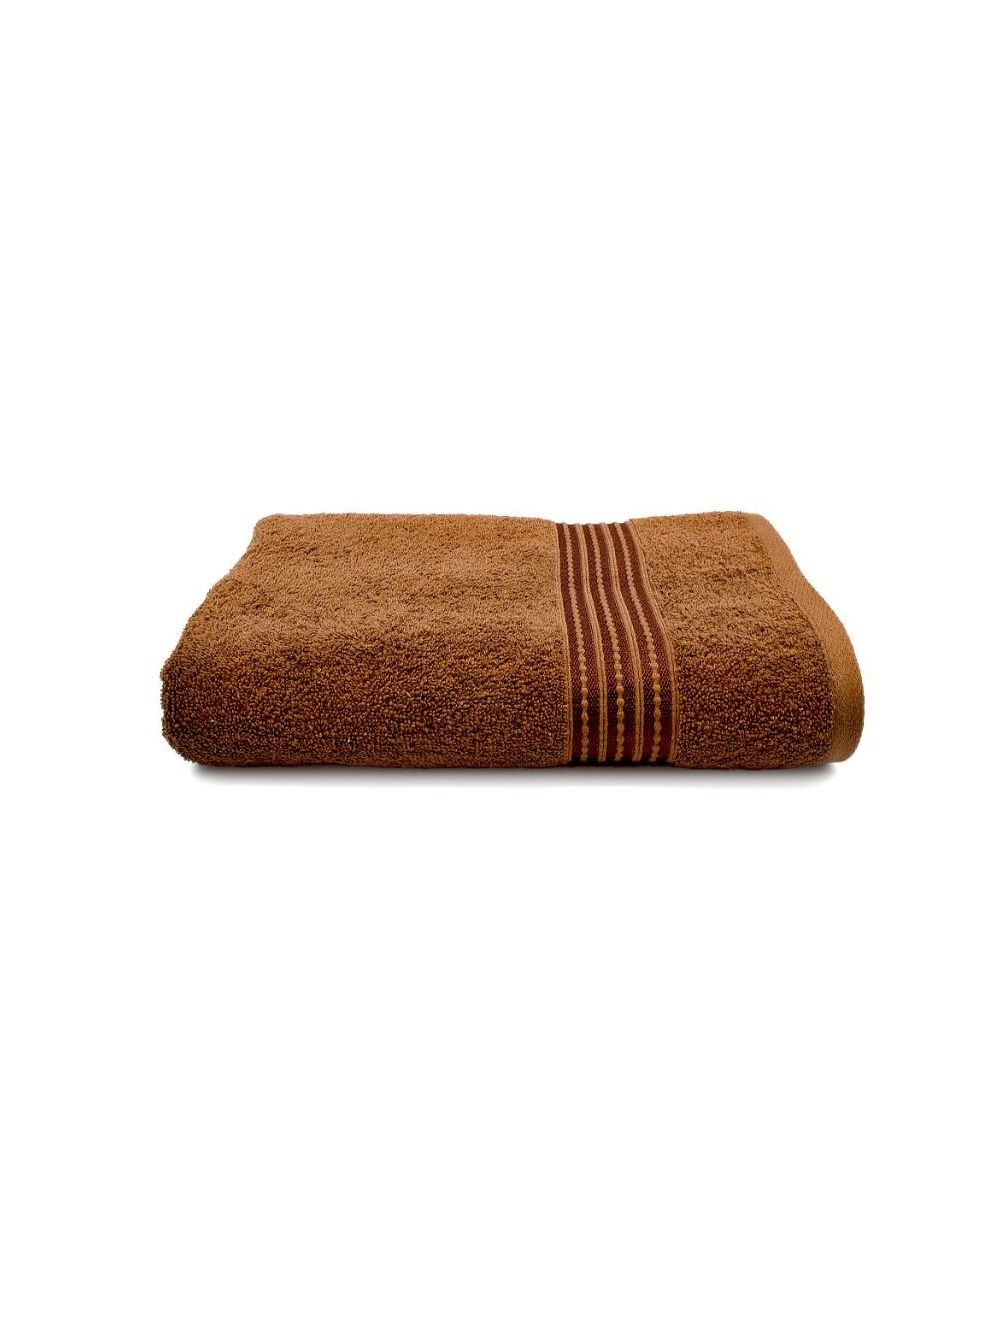 Rahalife 100% Cotton Bath Towel, Classic Collection, Brown   -14RLBT004